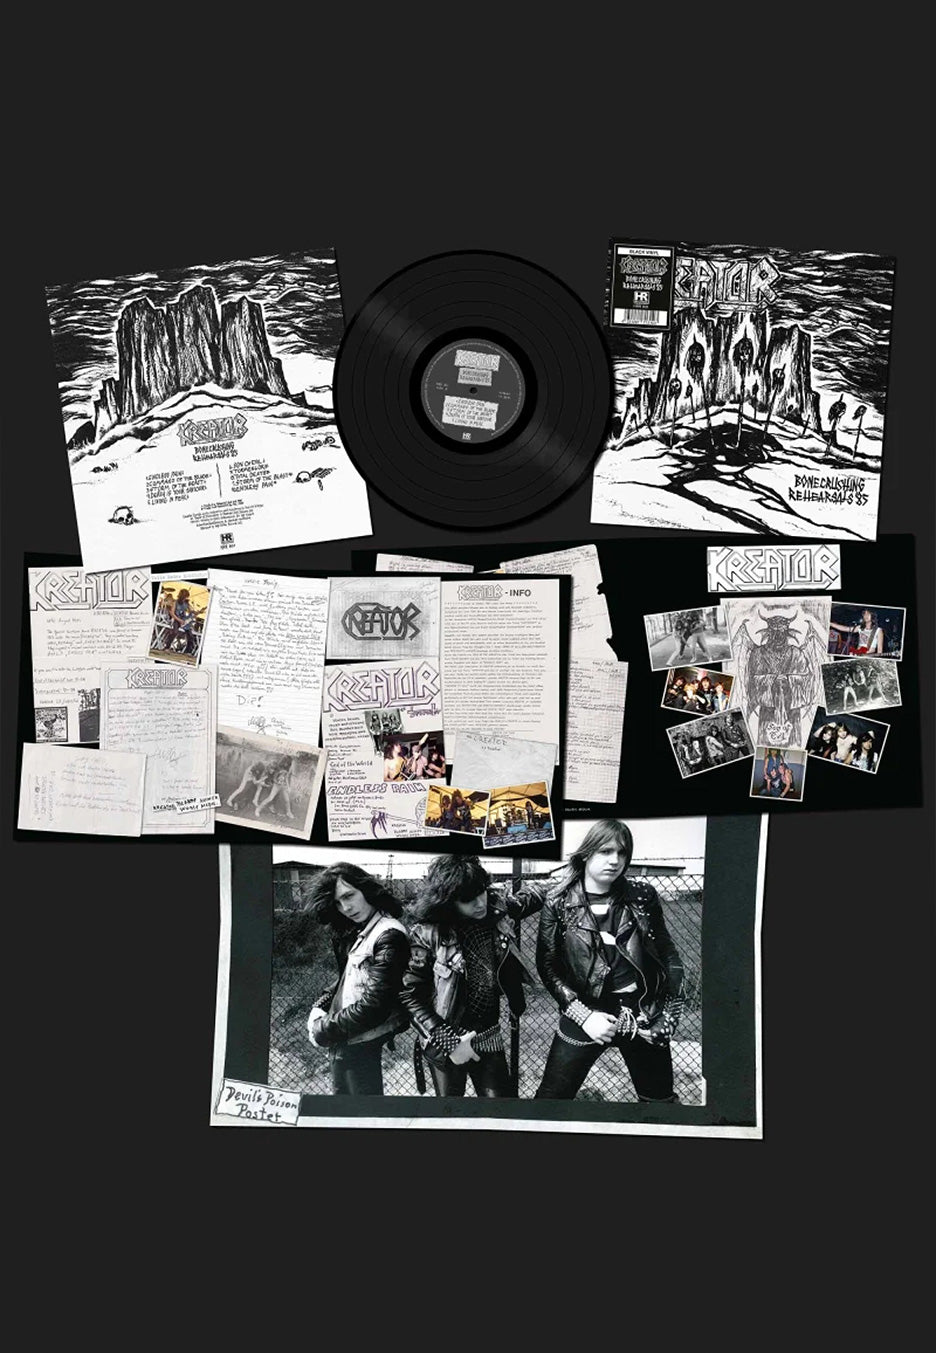 Kreator - Bonecrushing Rehearsals '85 Ltd. - Vinyl